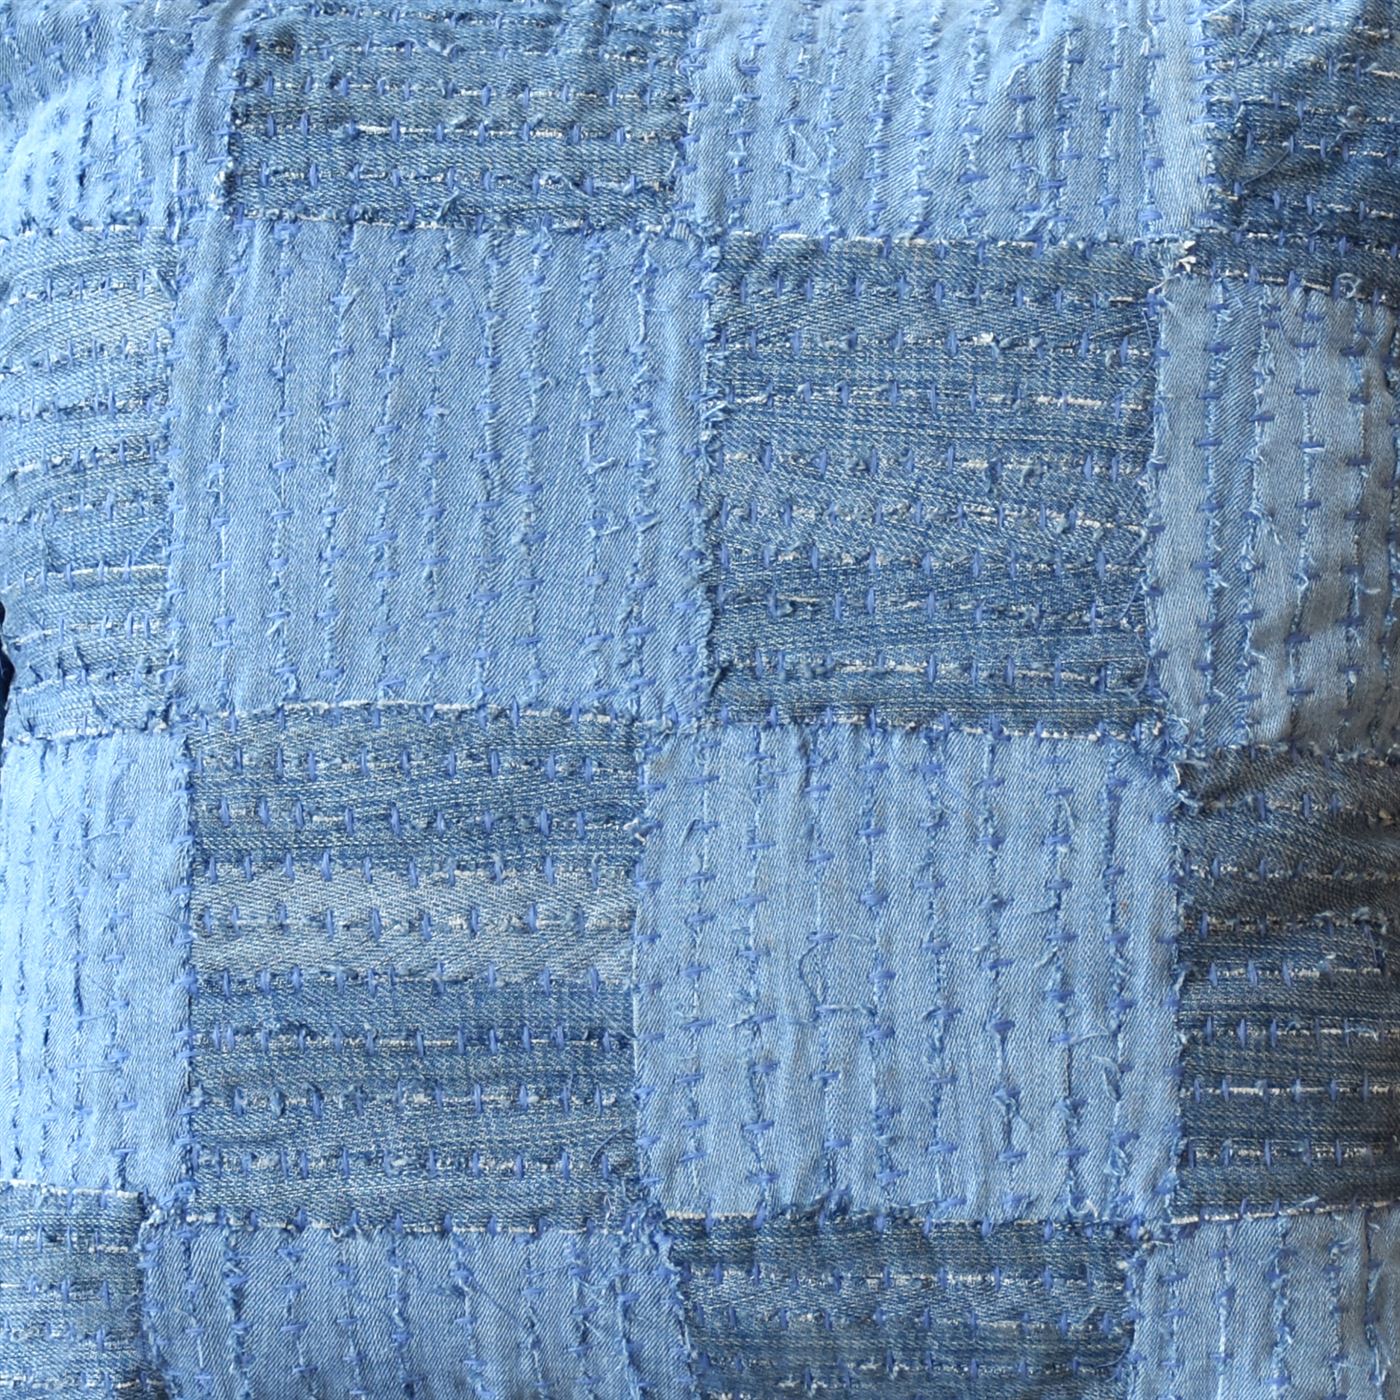 Ringe Pillow, Denim, Blue, Hm Stitching, Flat Weave